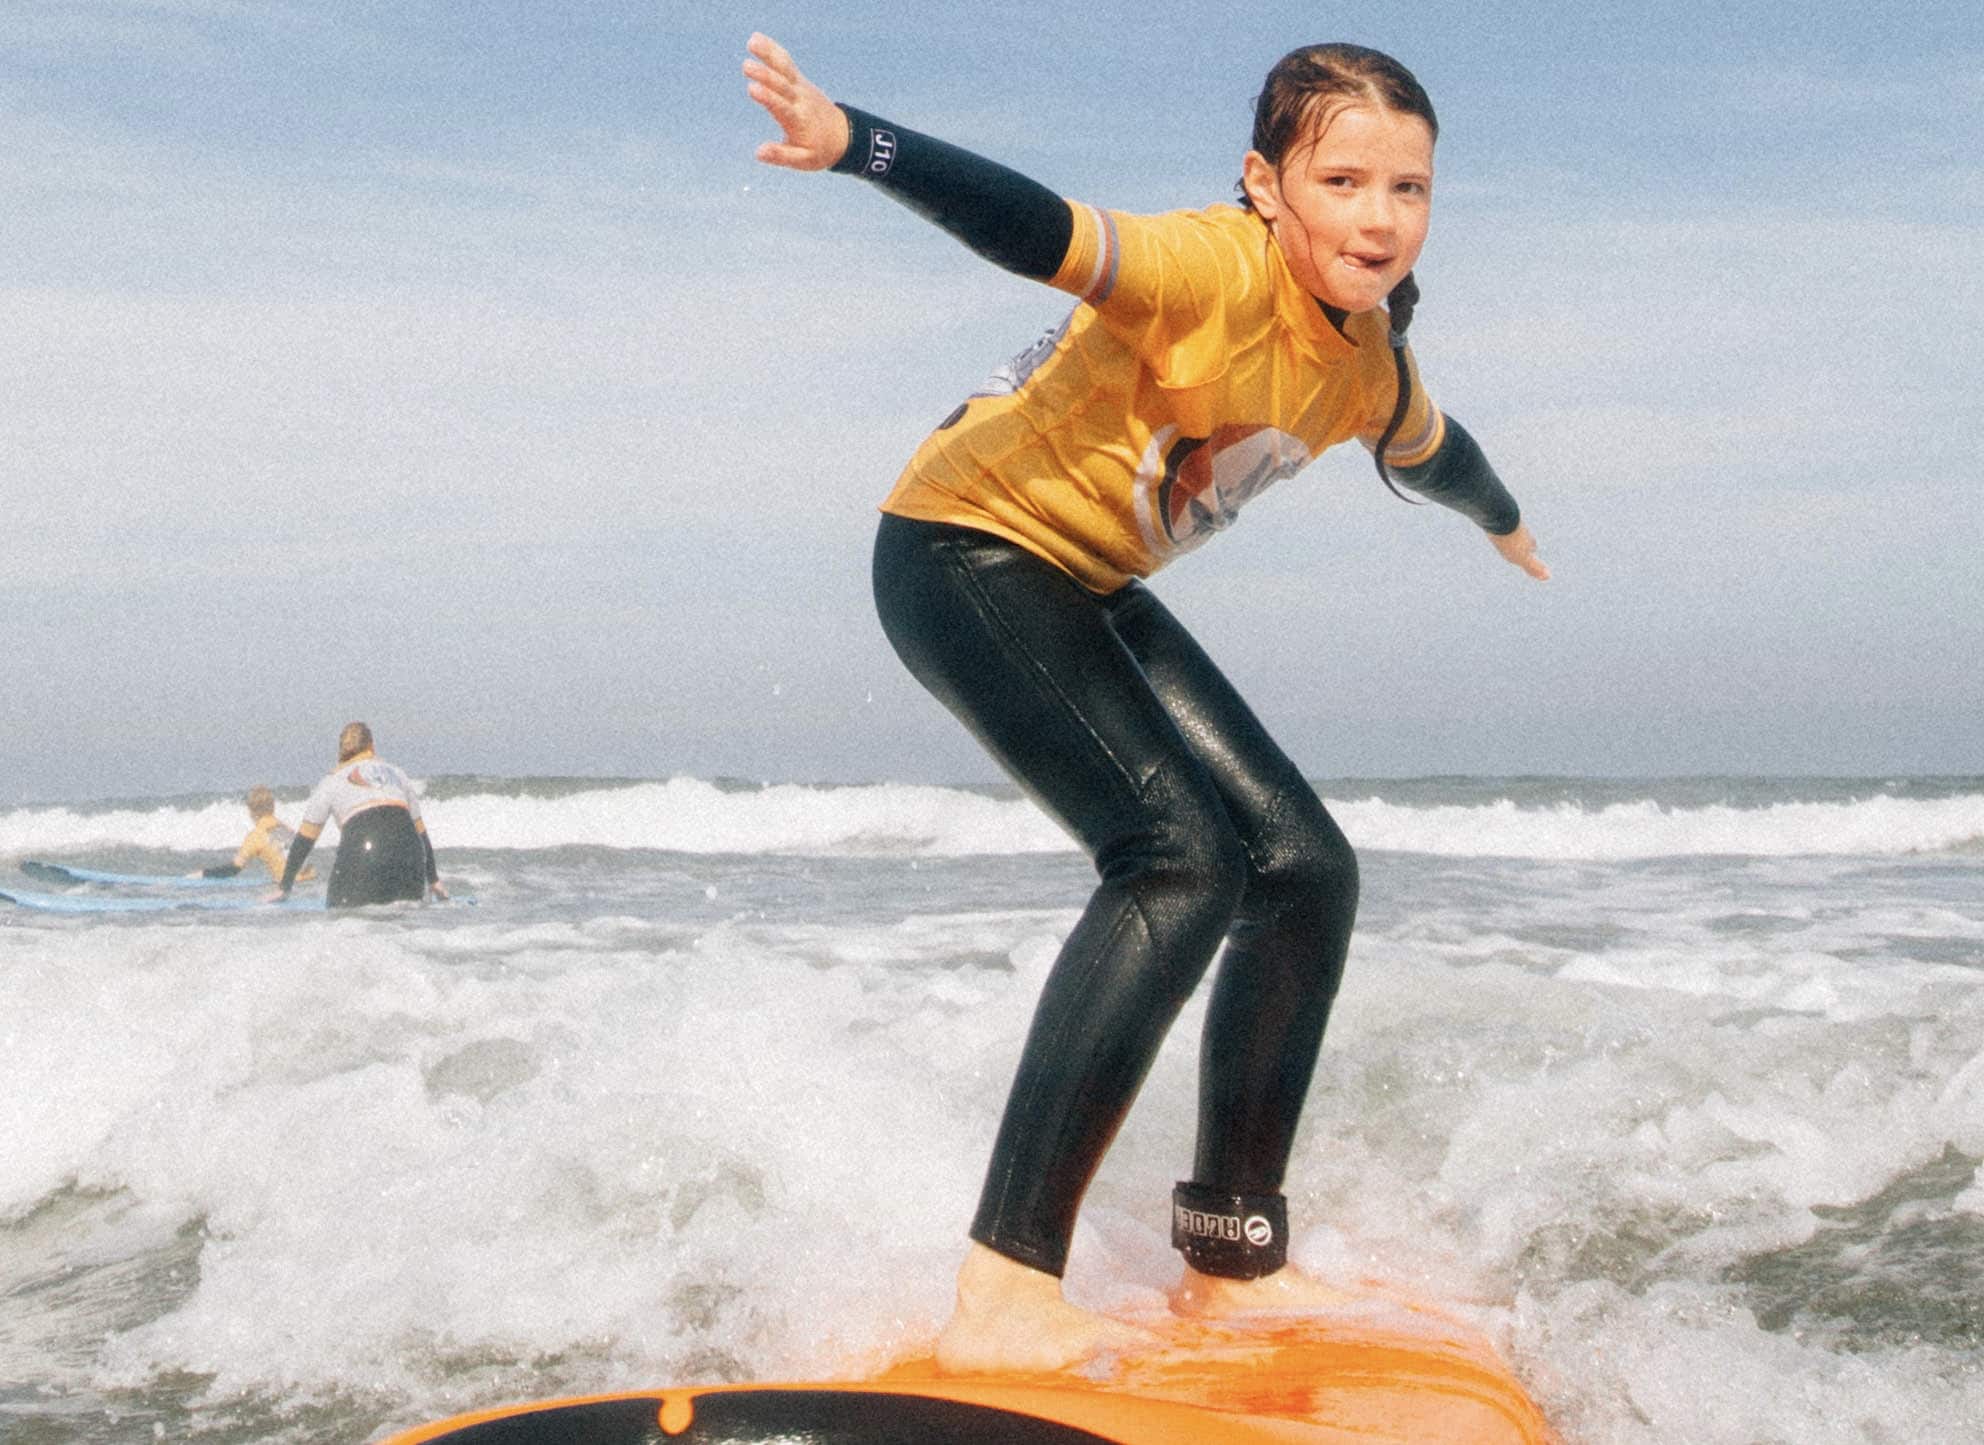 Young girl surfing a foam surfboard at Bamburgh beach